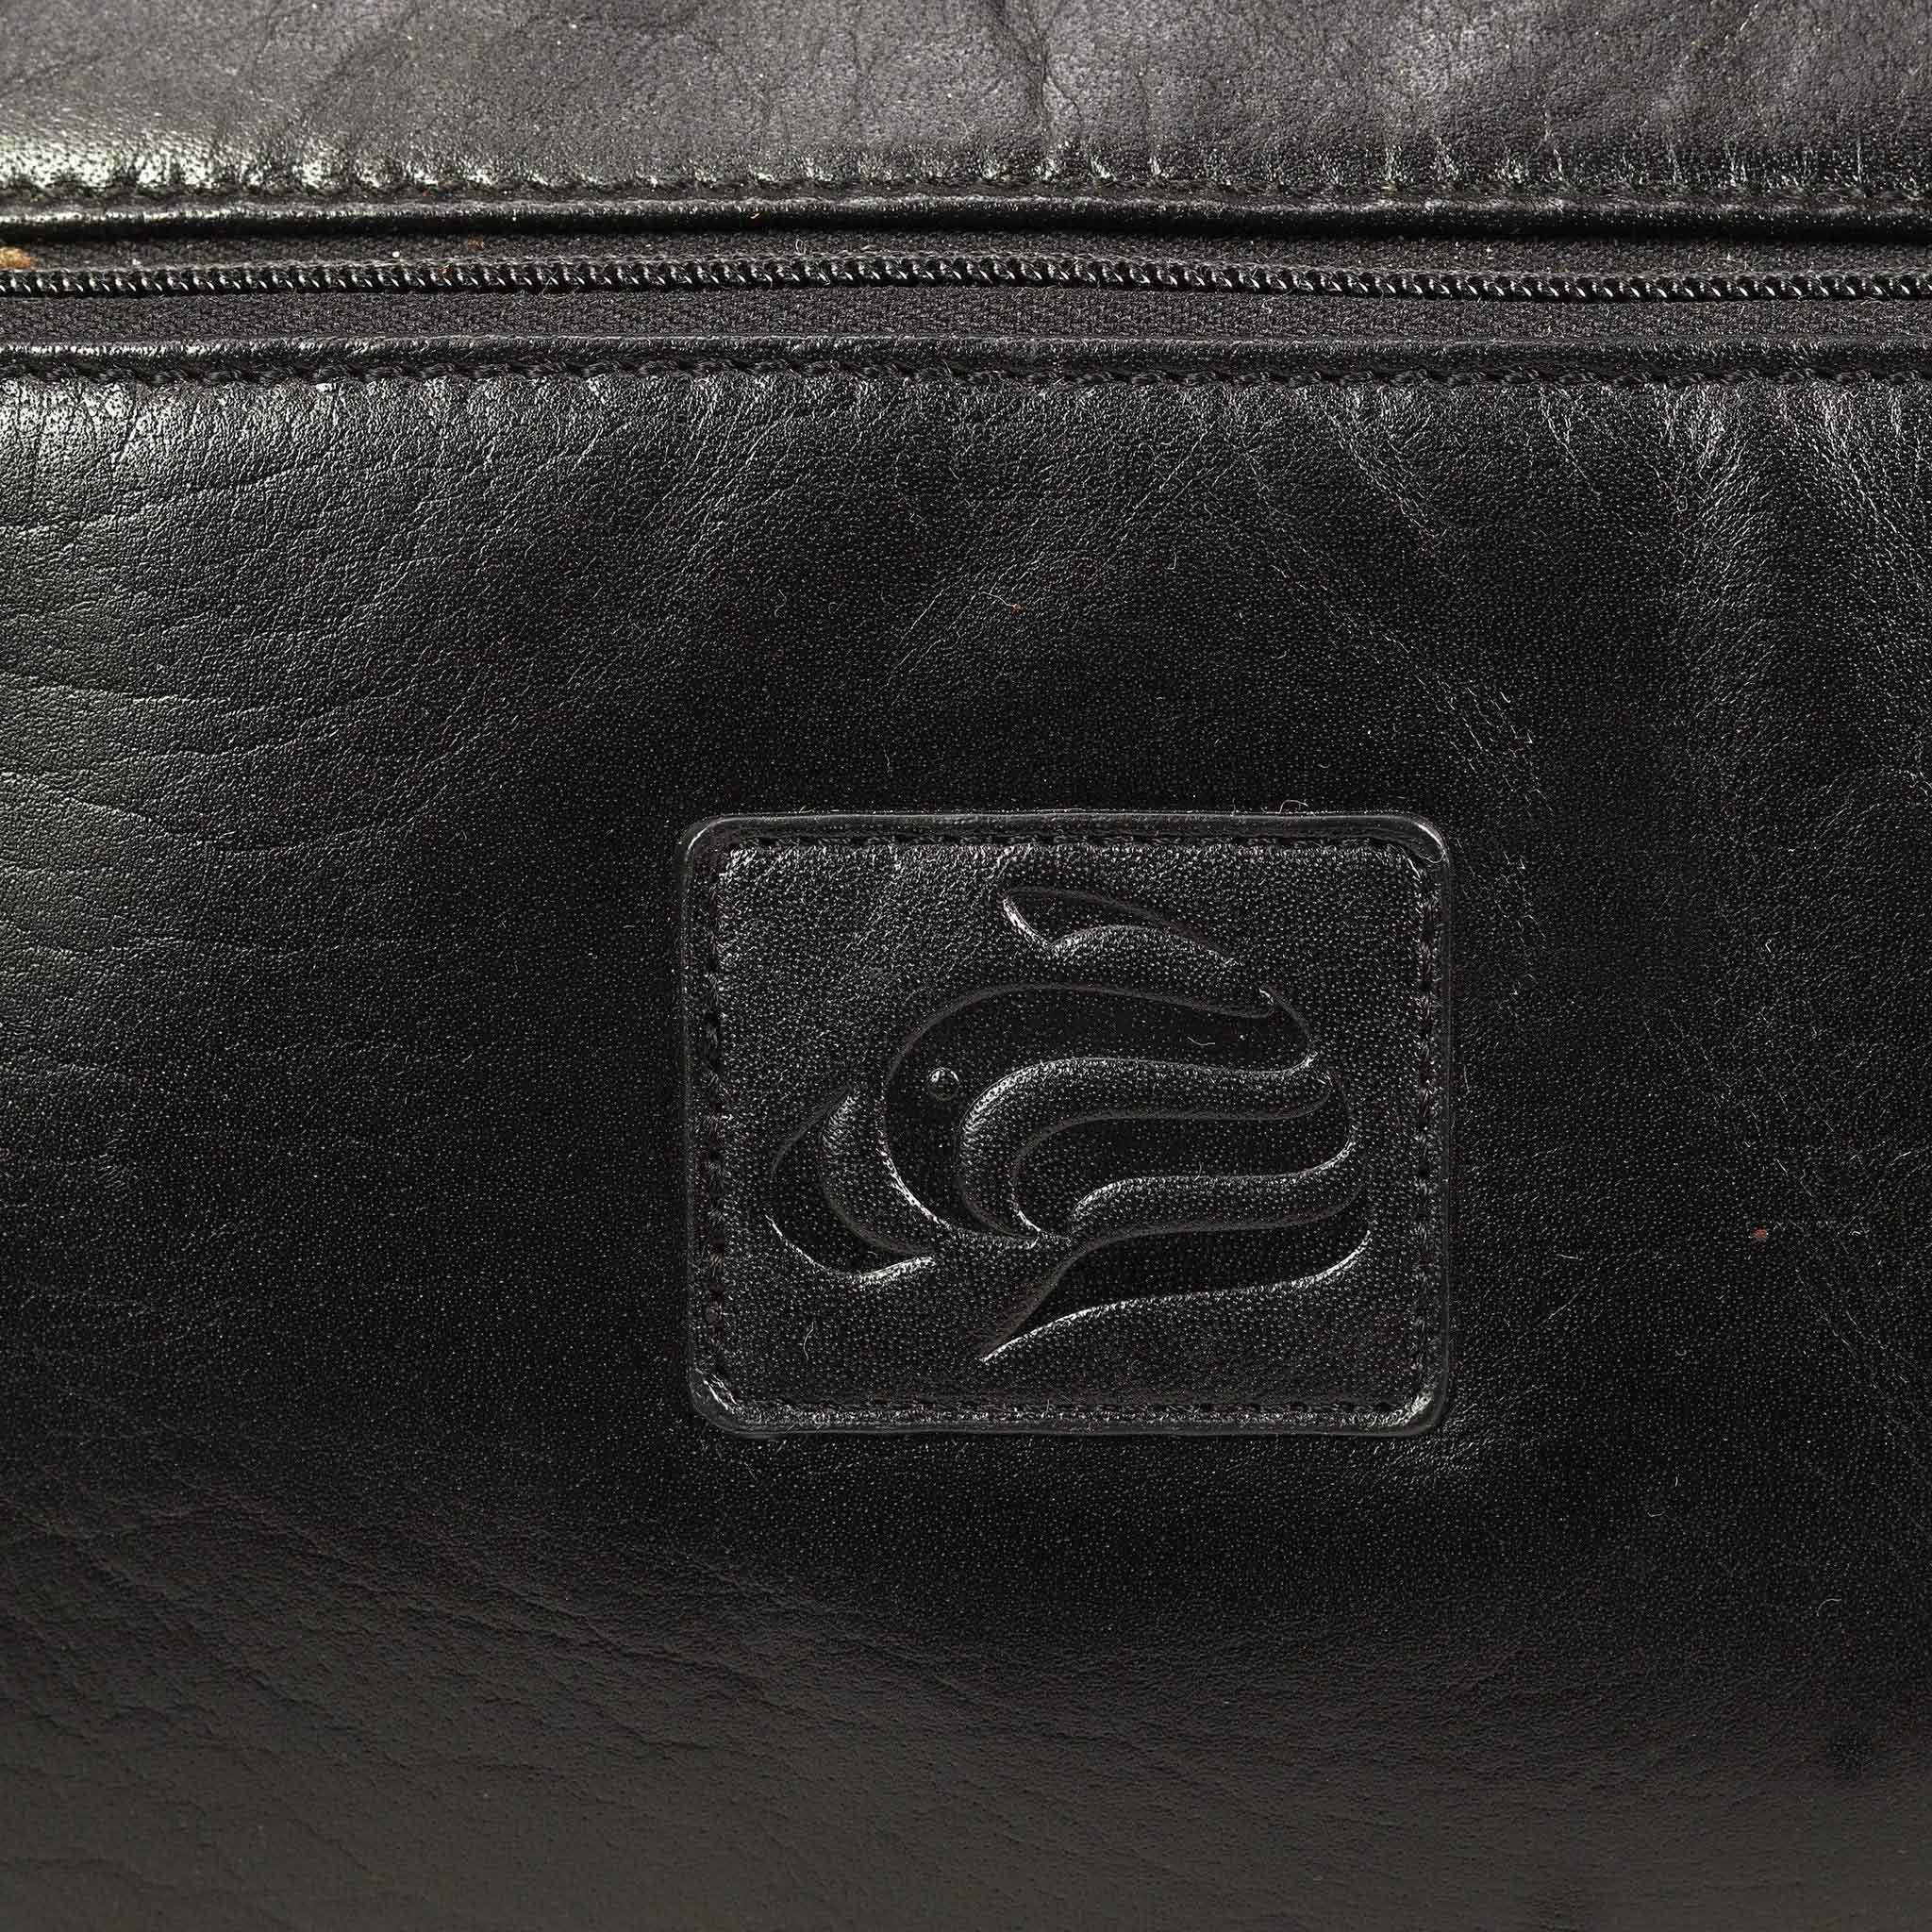 Vintage Leather Gear Bag Black The Premium Classic Duffle